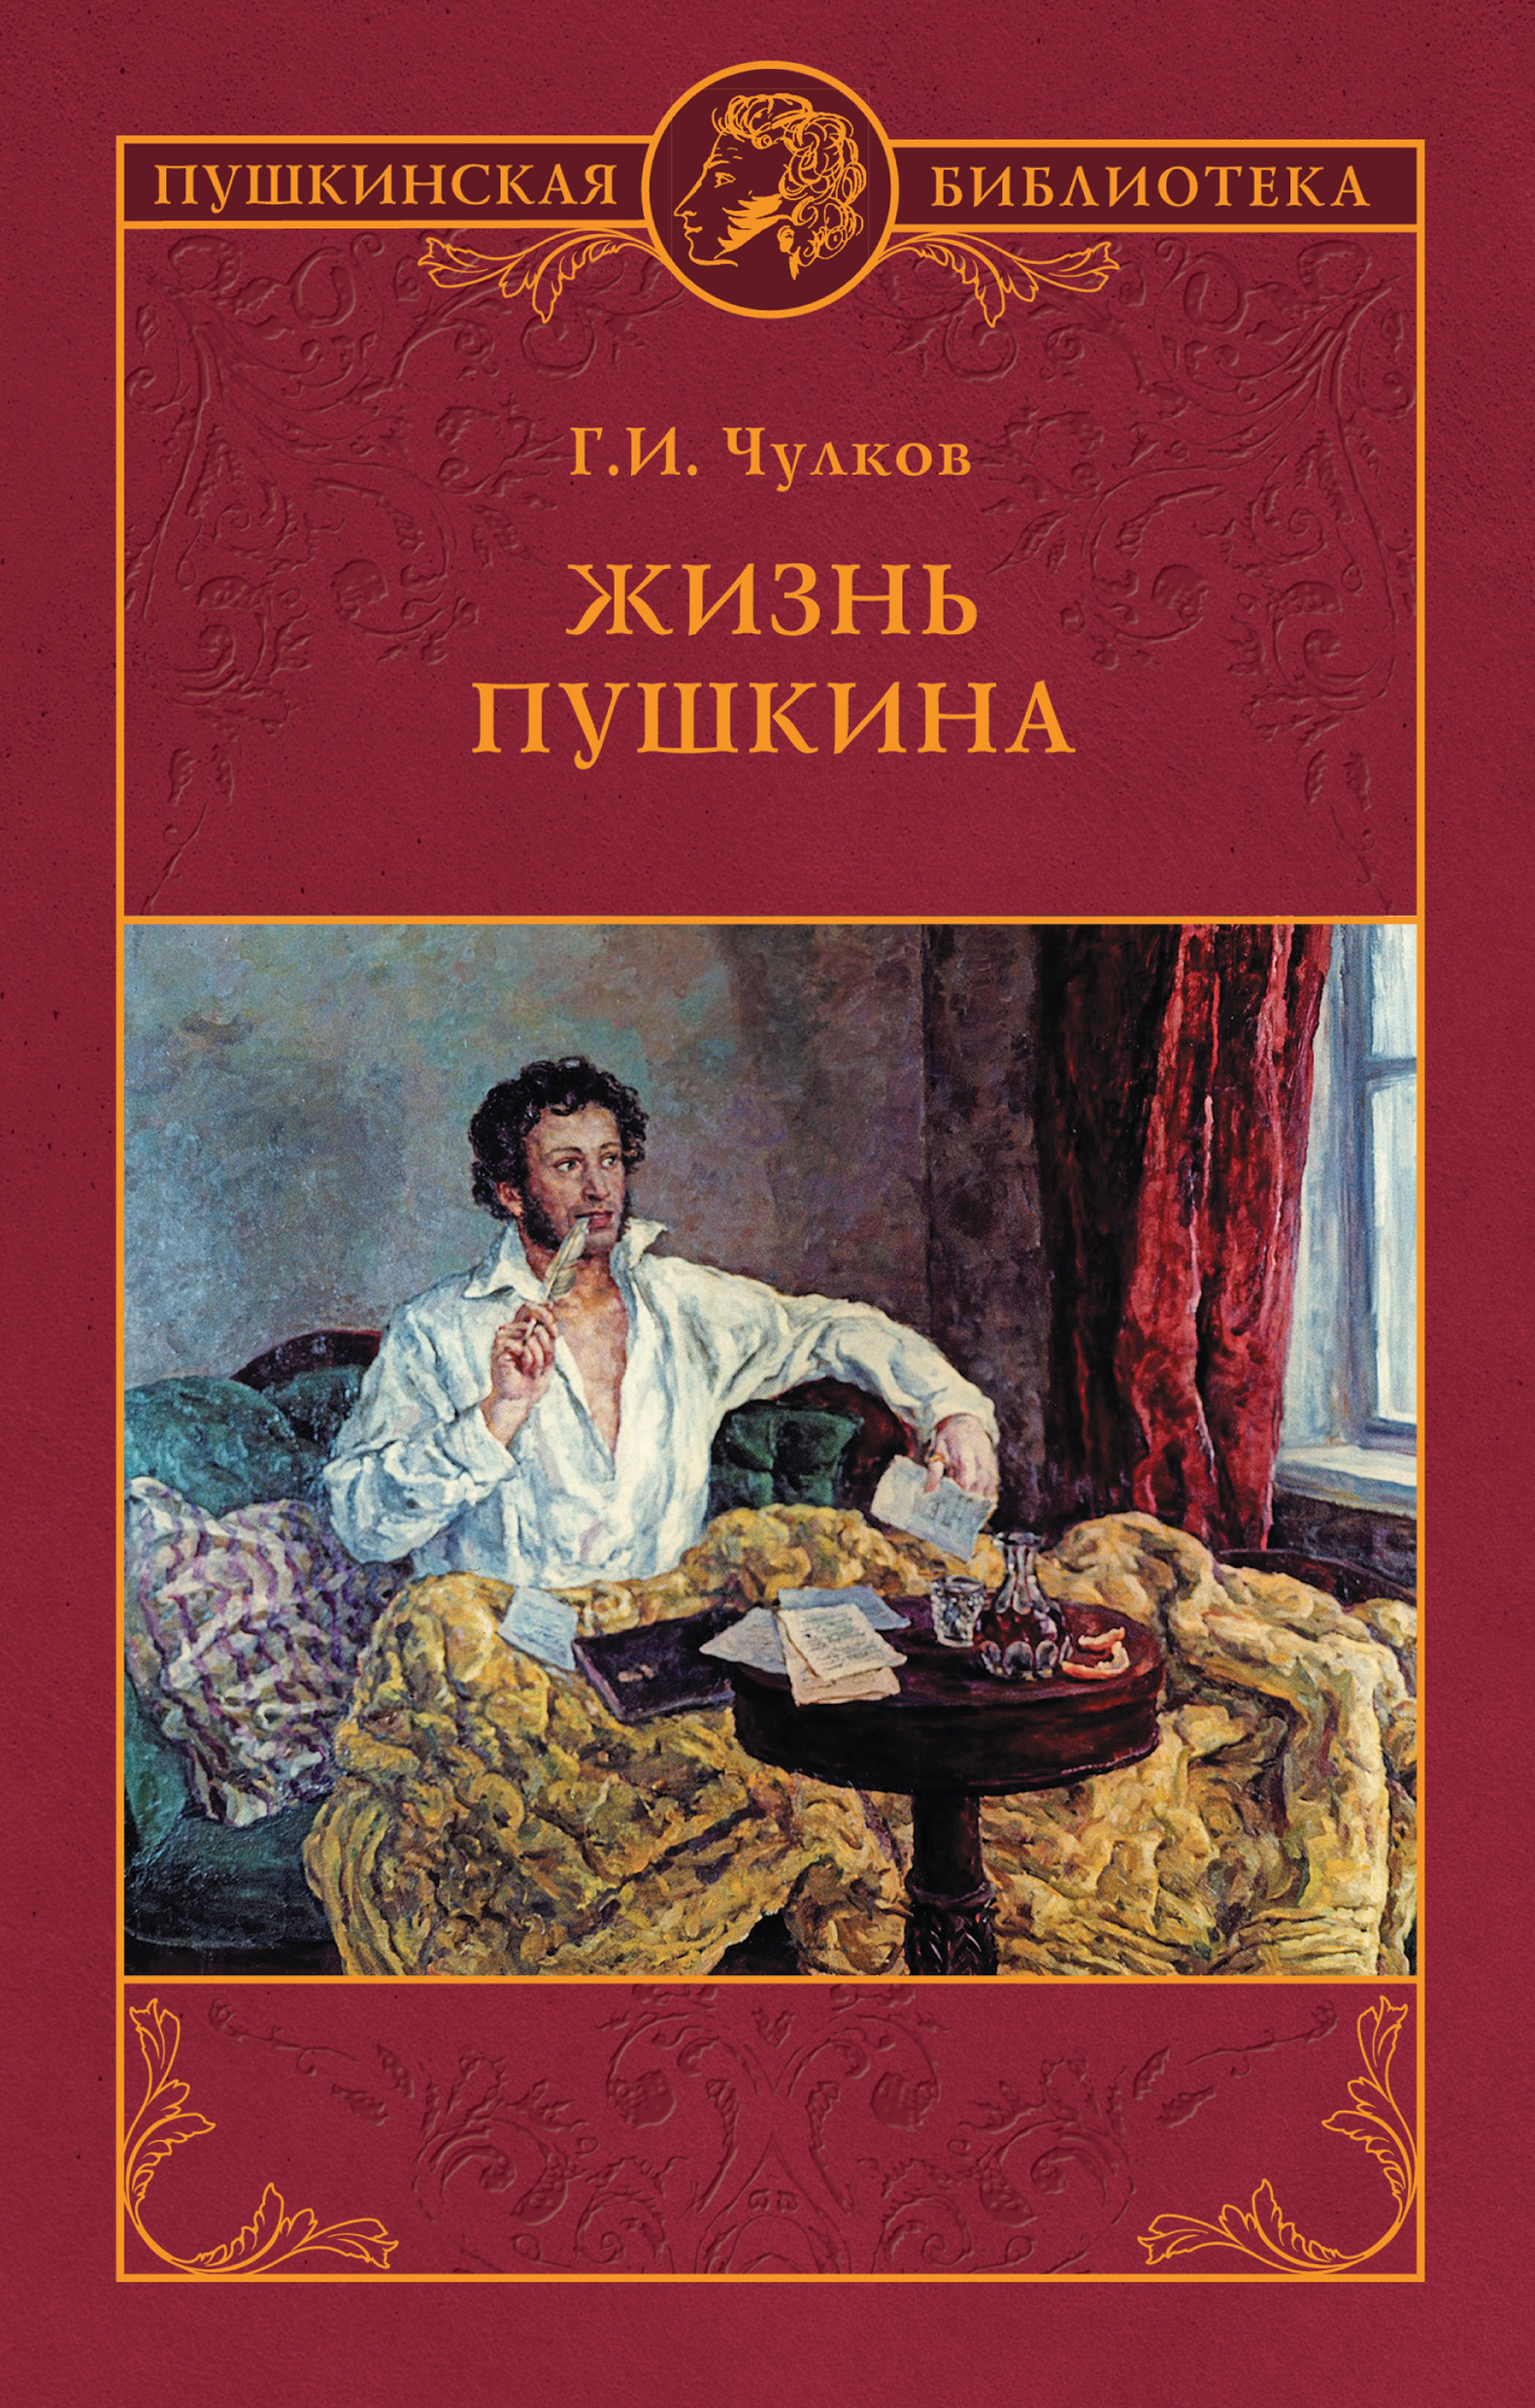 Книги писатель пушкин. Книги Пушкина. Книги о Пушкине.